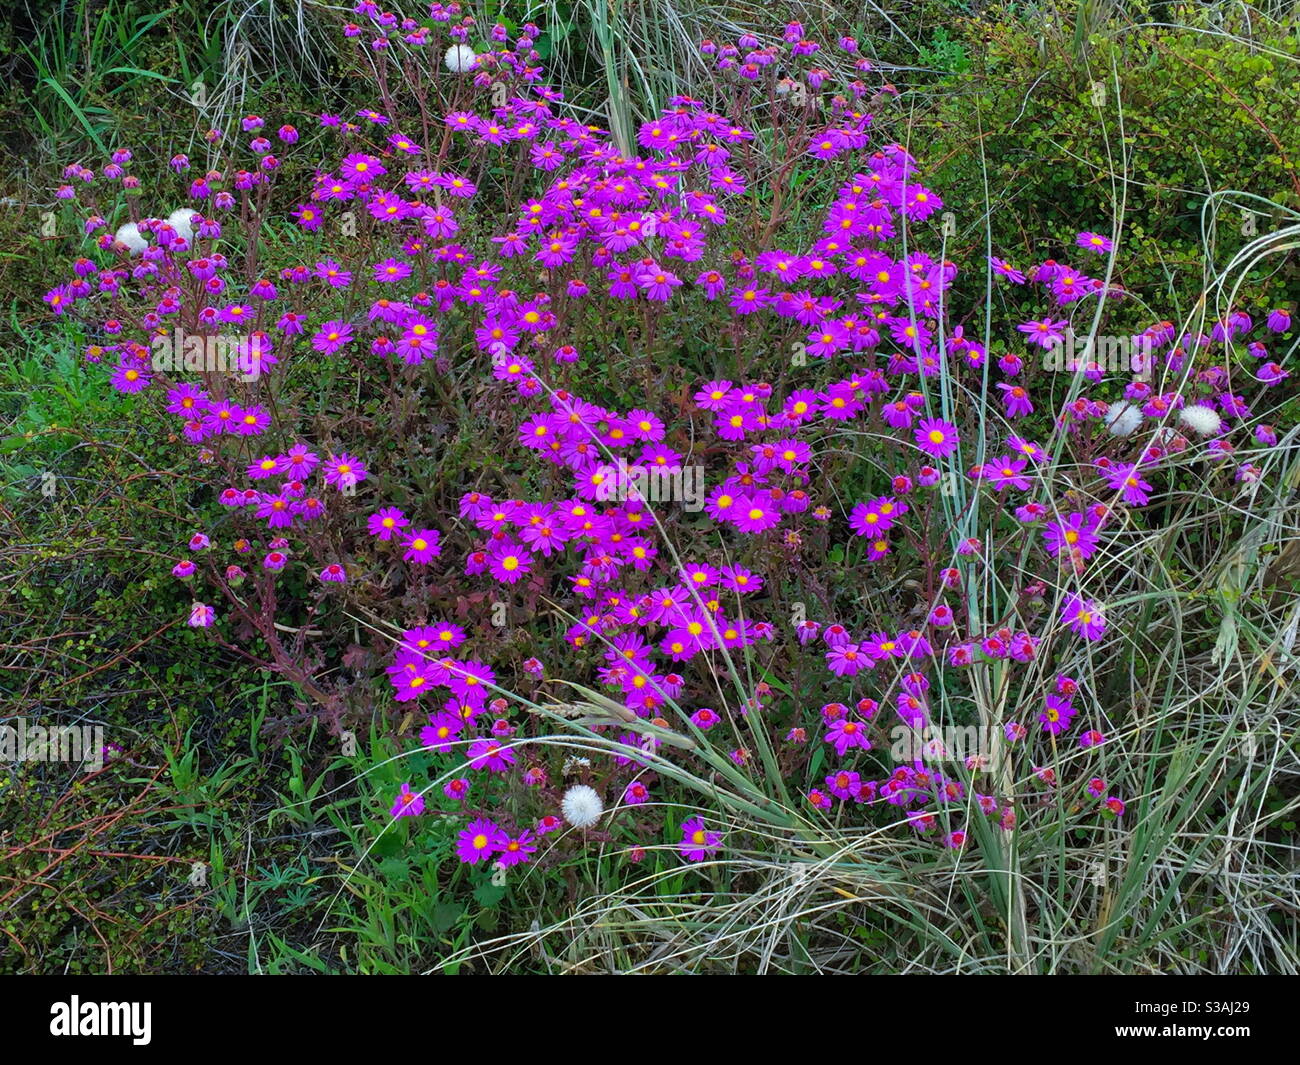 Masses of Pink wild daisies Stock Photo